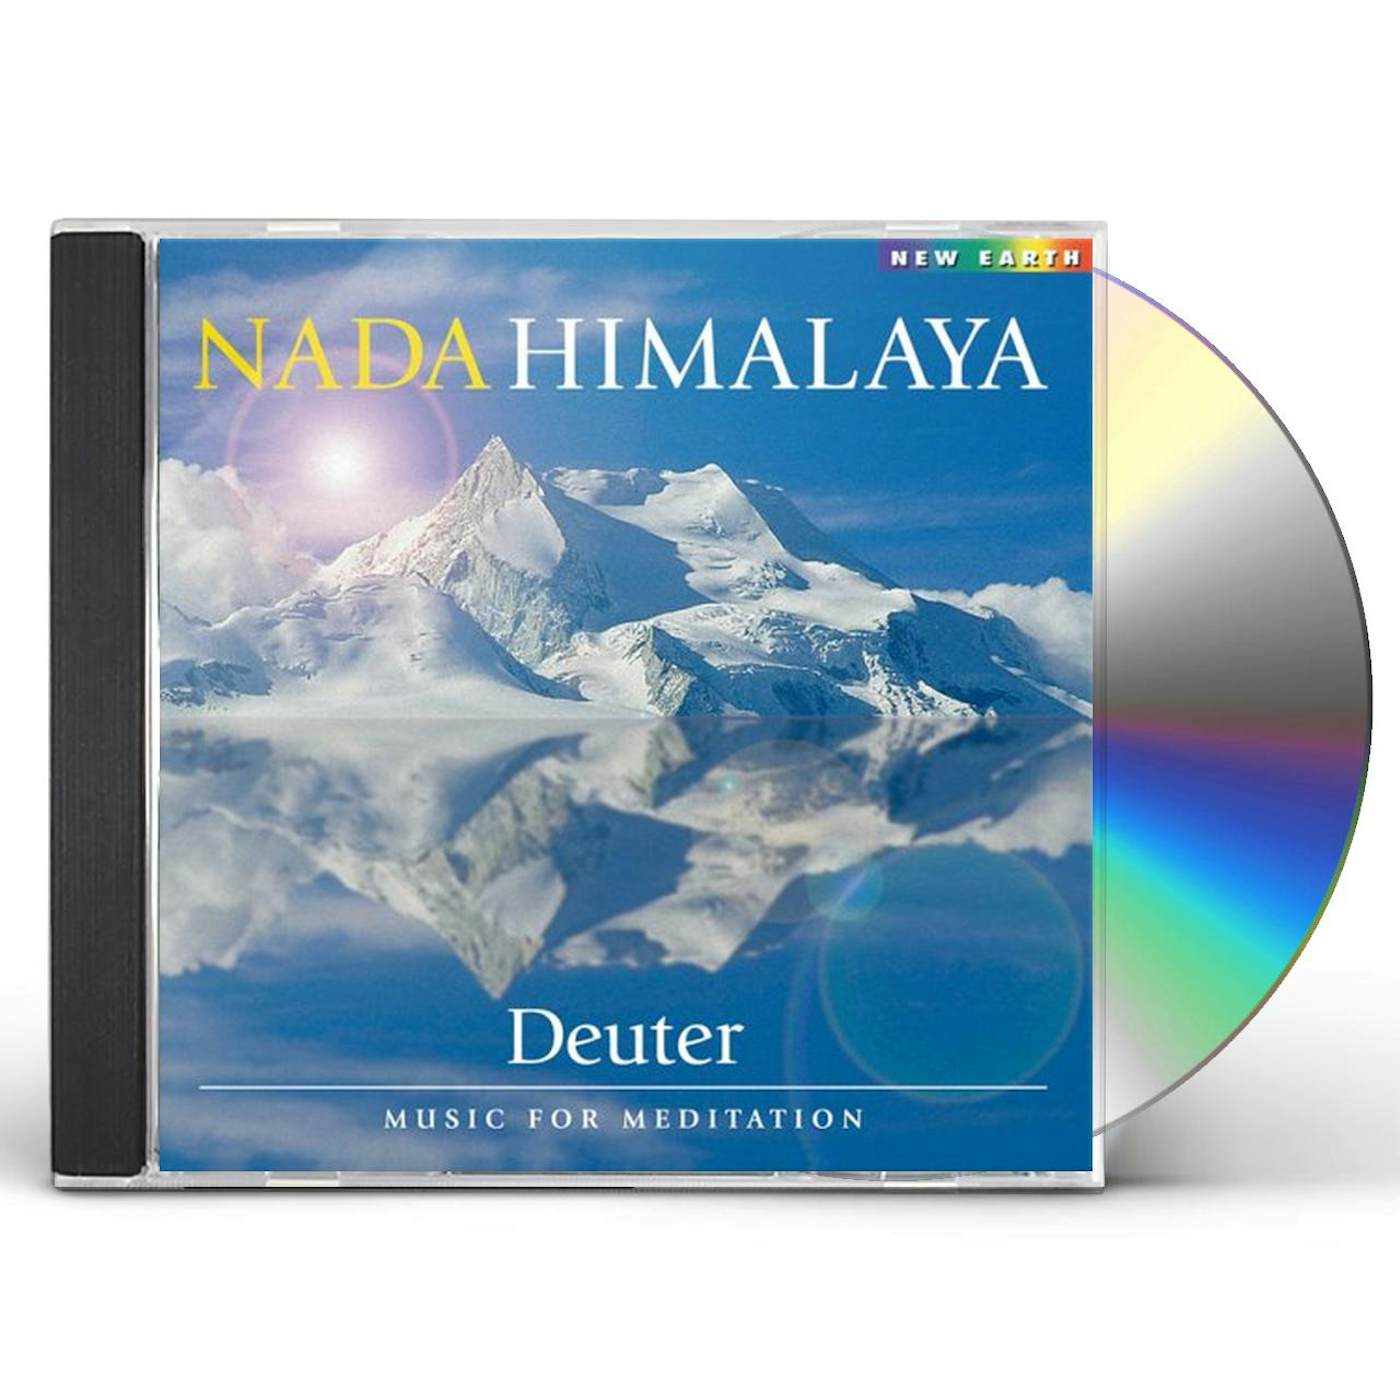 Deuter NADA HIMALAYA CD